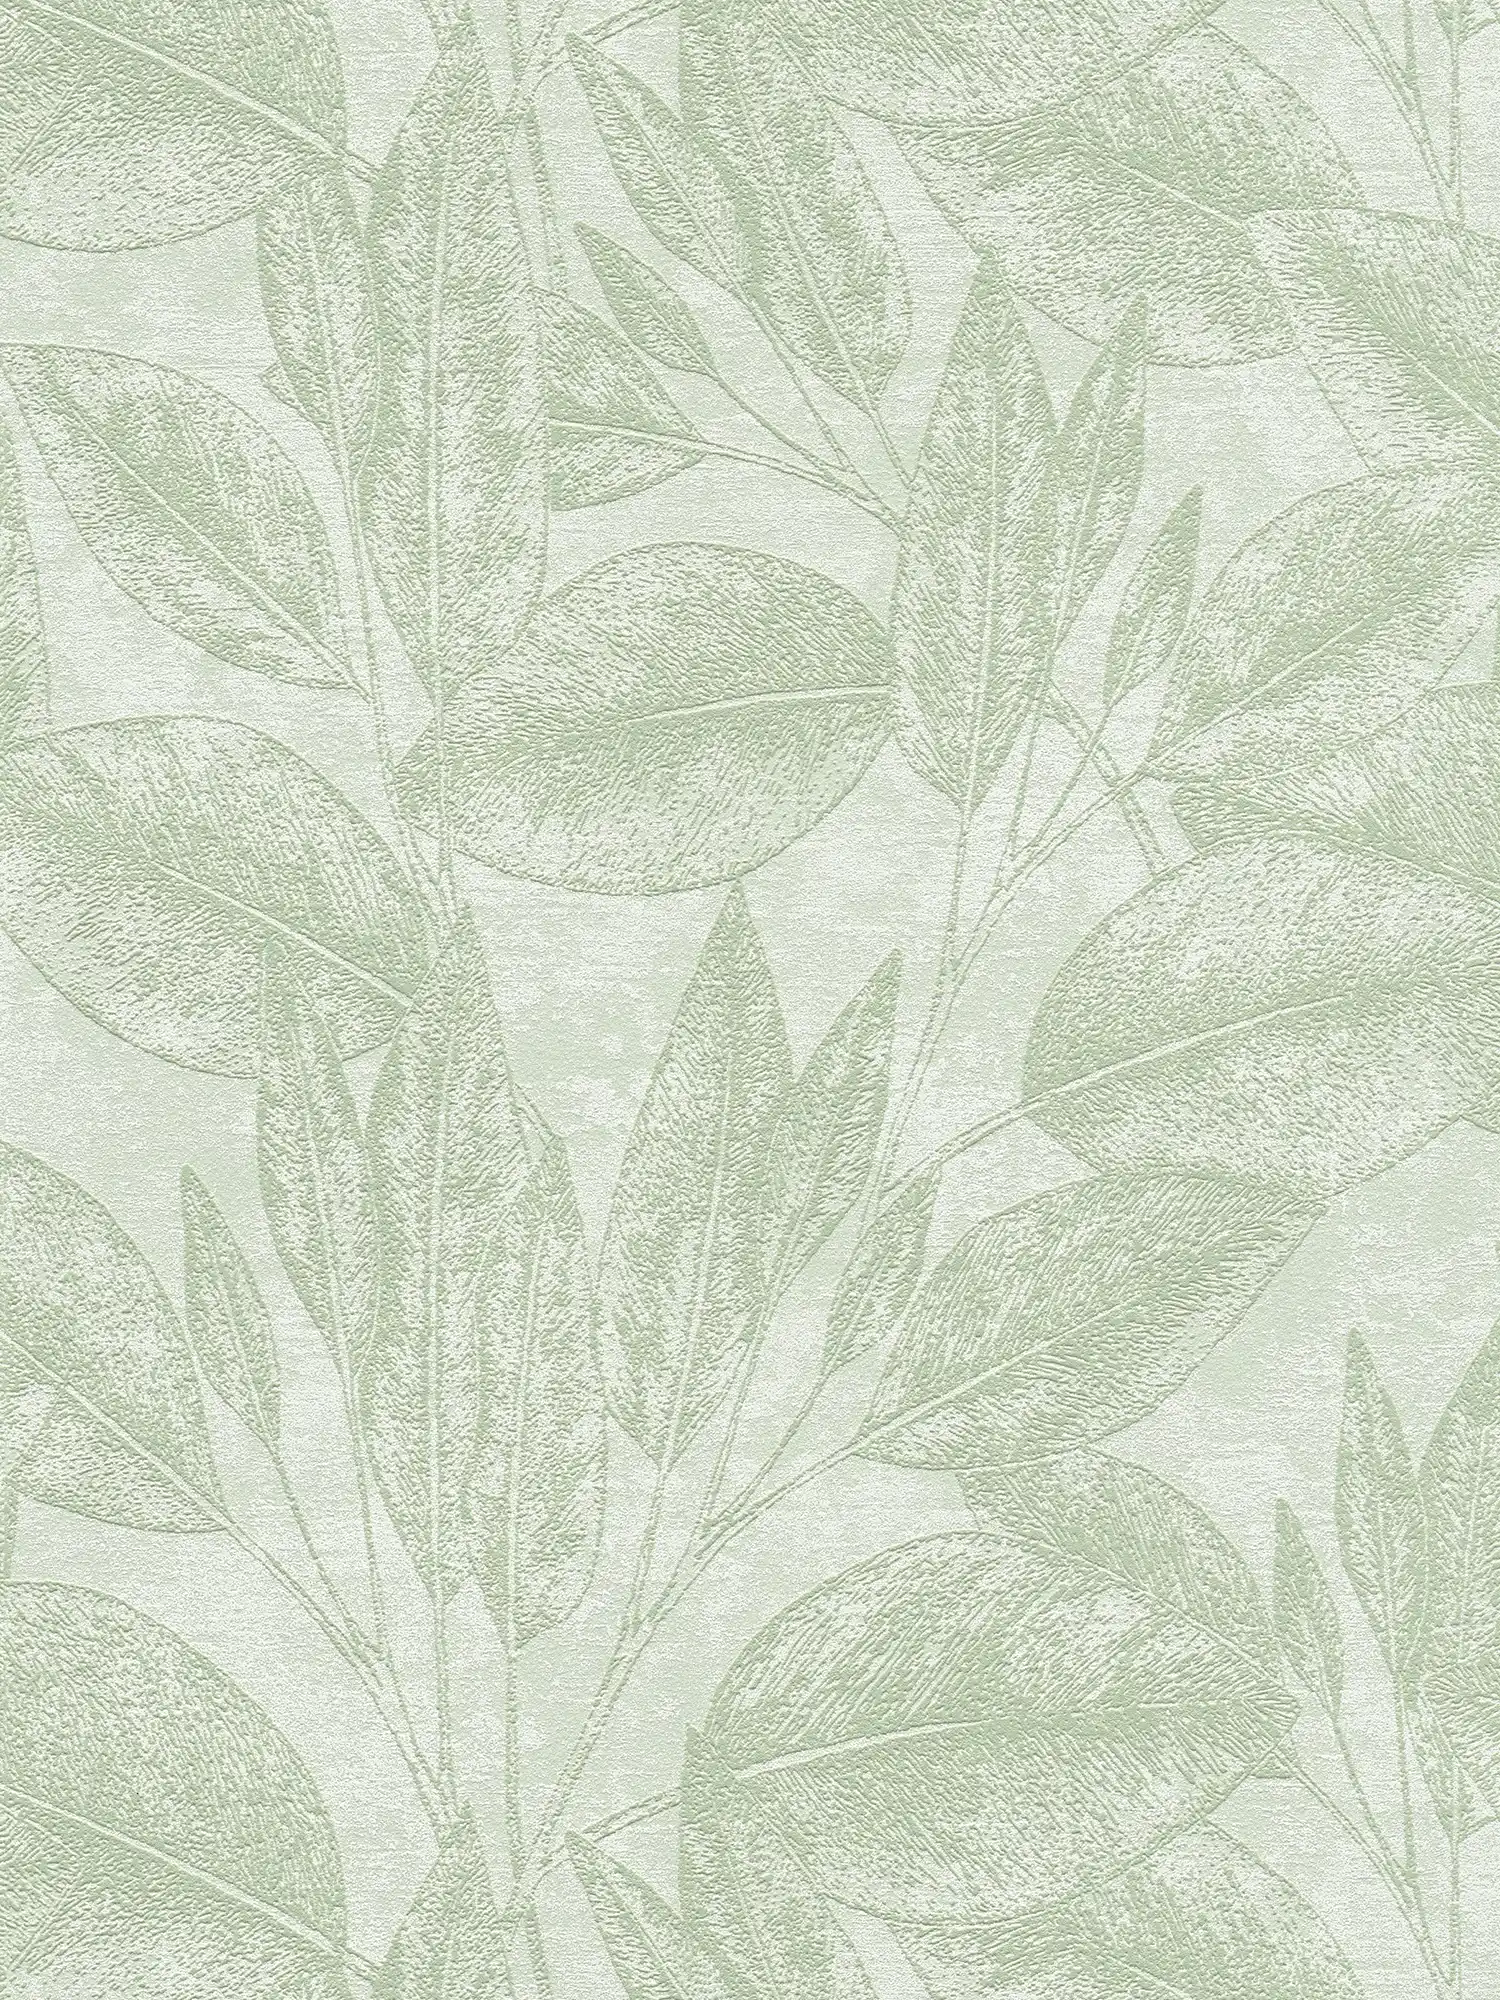 Papier peint intissé naturel avec feuilles & motifs structurés - vert
